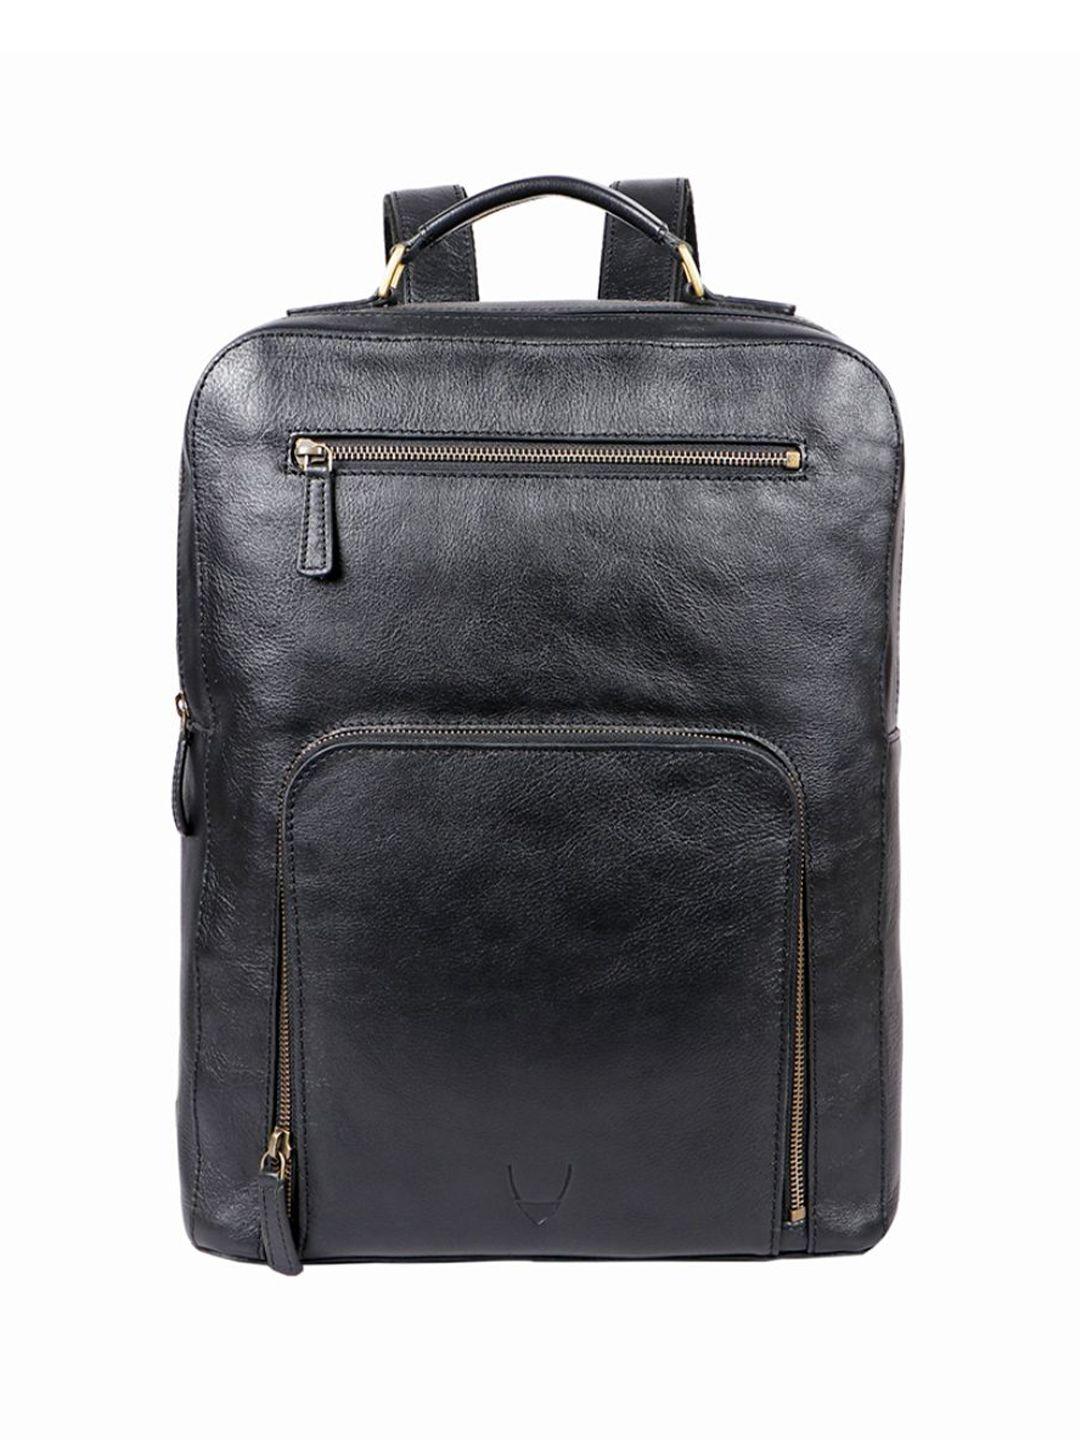 hidesign men non-padded leather backpack